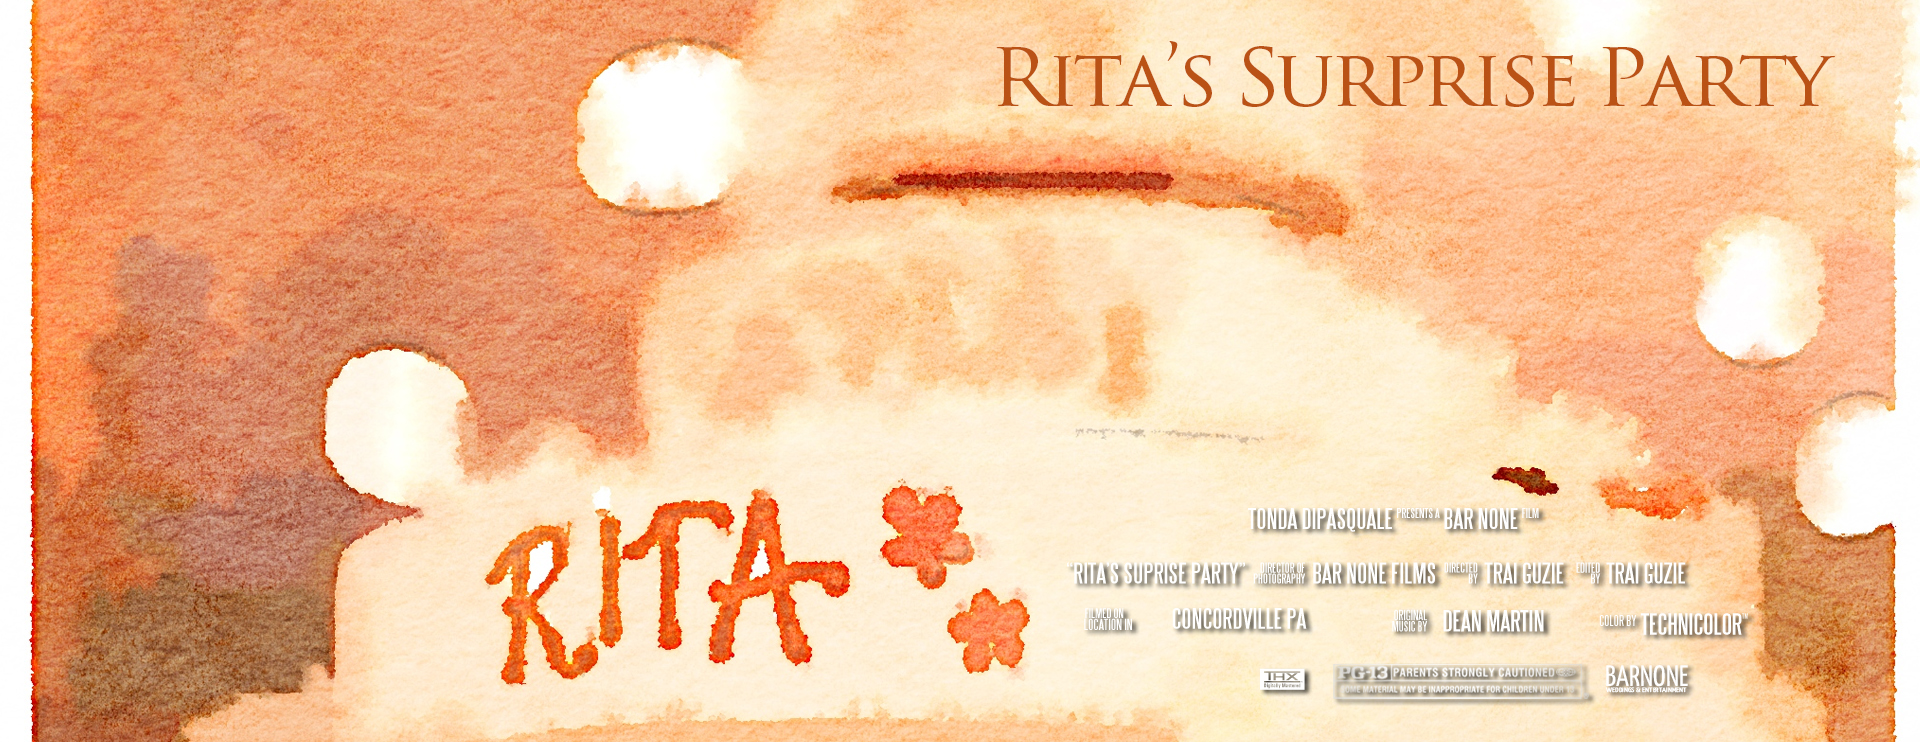 Rita’s Surprise Party – Concordville Hotel